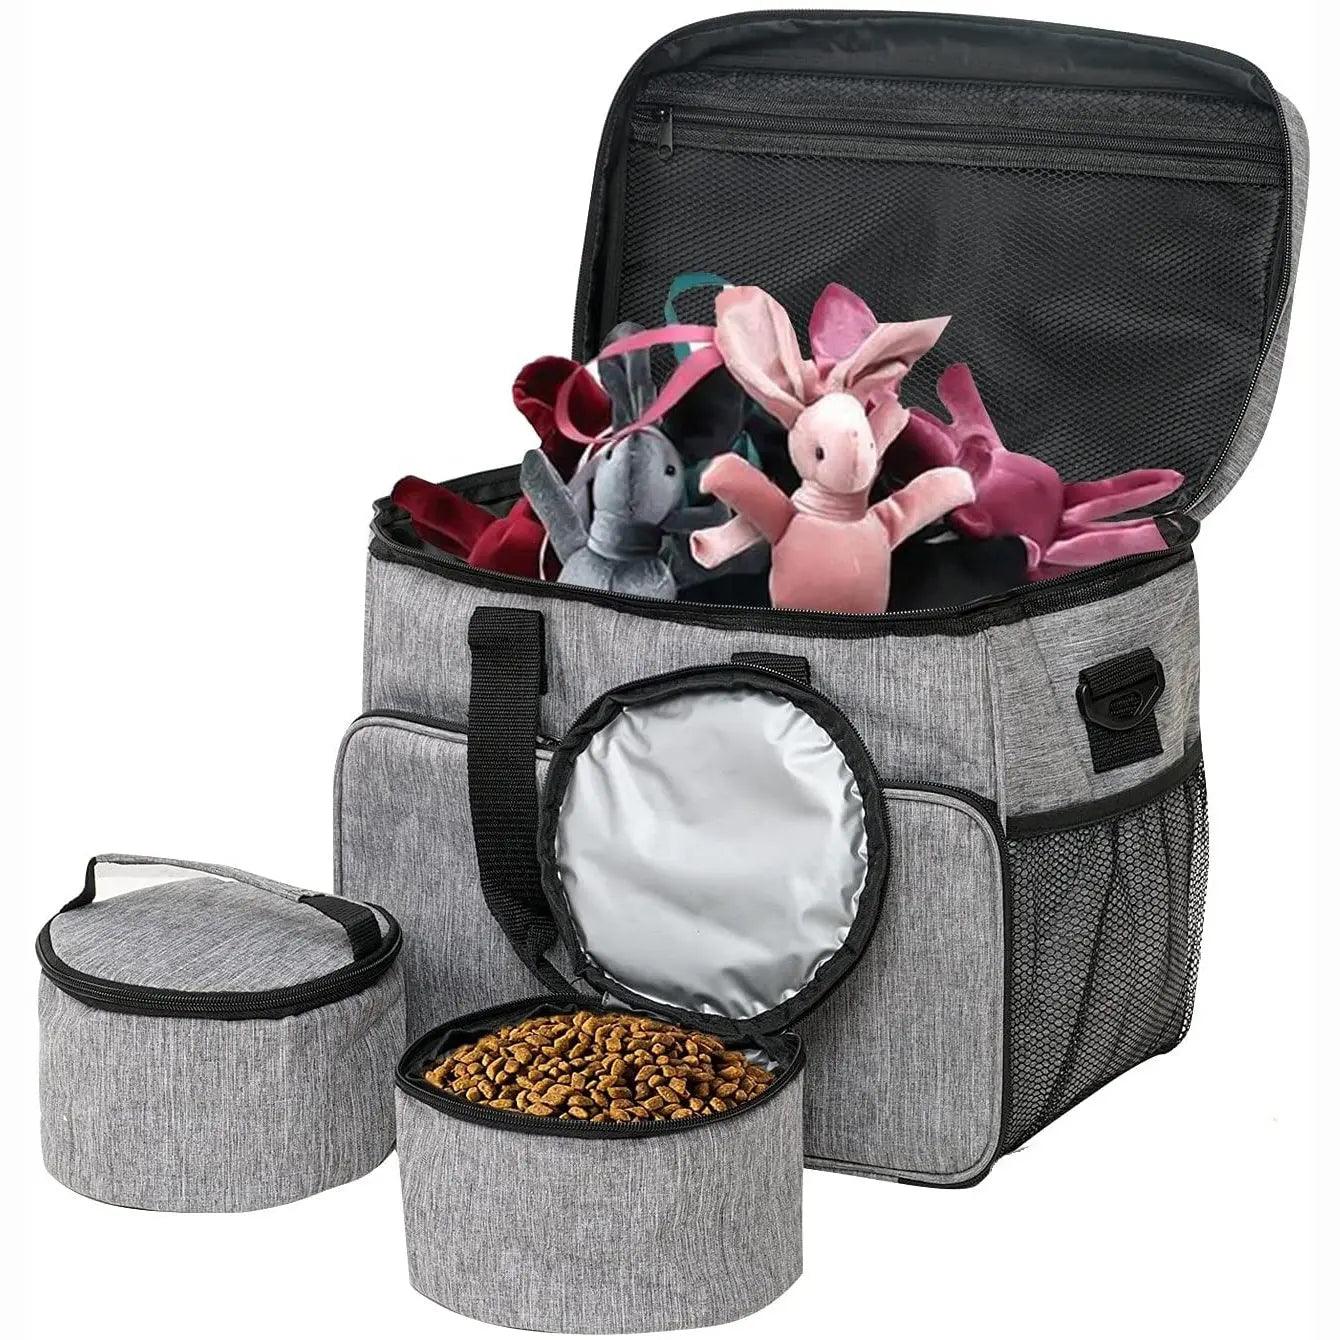  Dog Travel Bag cashymart